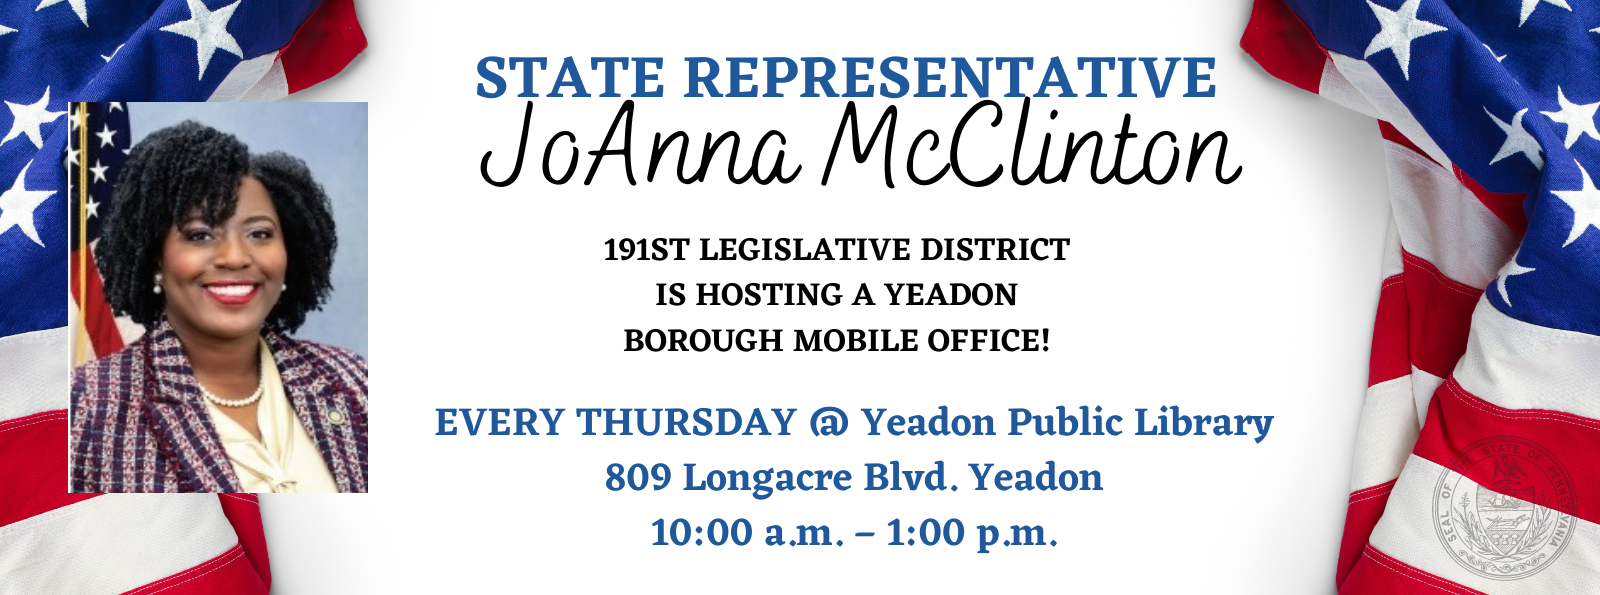 State Representative Joanna McClinton: Mobile Office